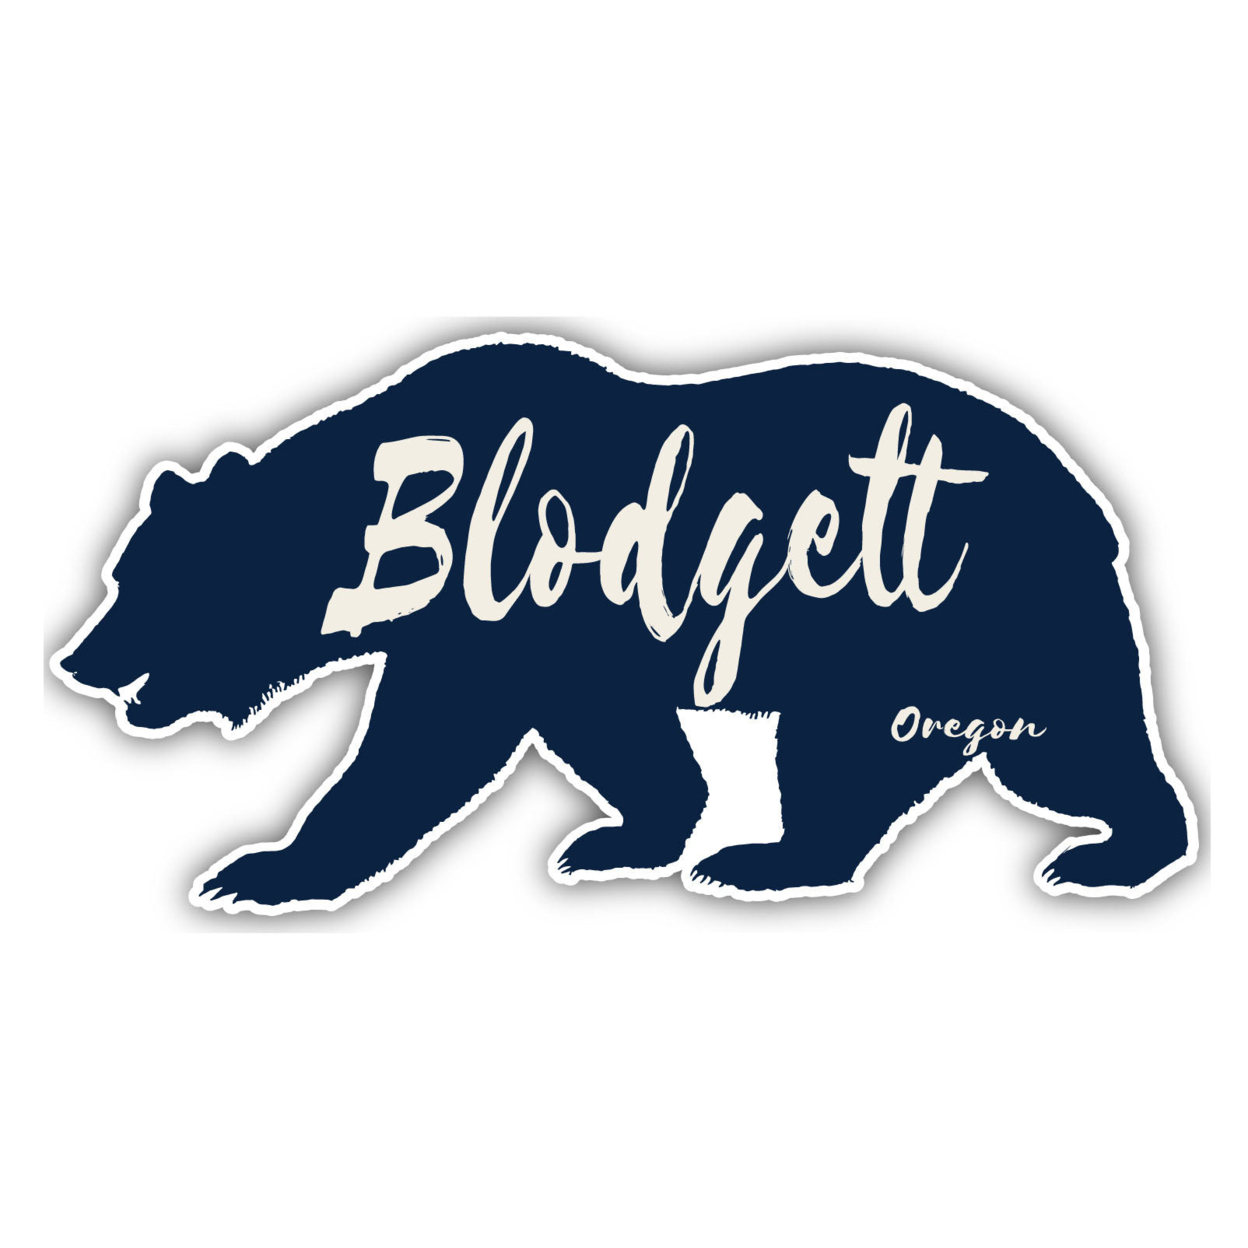 Blodgett Oregon Souvenir Decorative Stickers (Choose Theme And Size) - Single Unit, 8-Inch, Bear